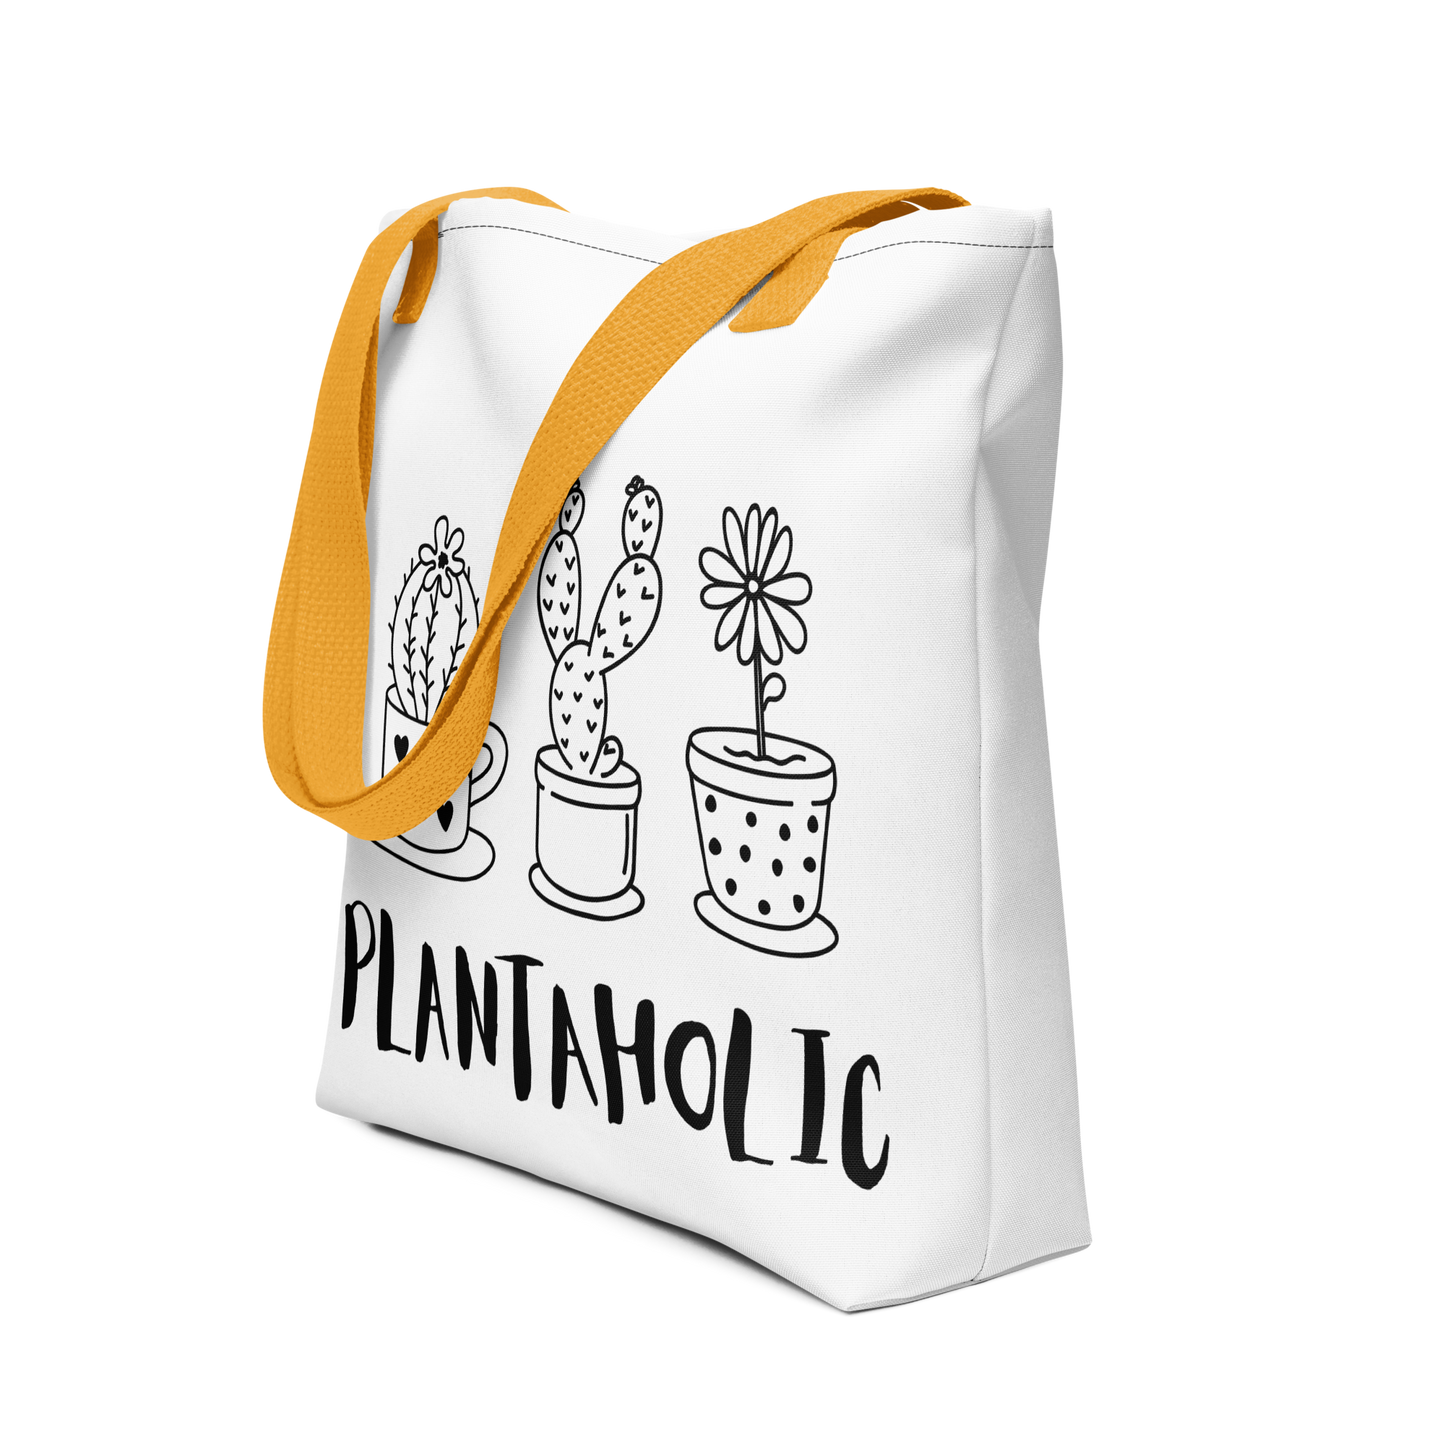 Plantaholic Tote bag